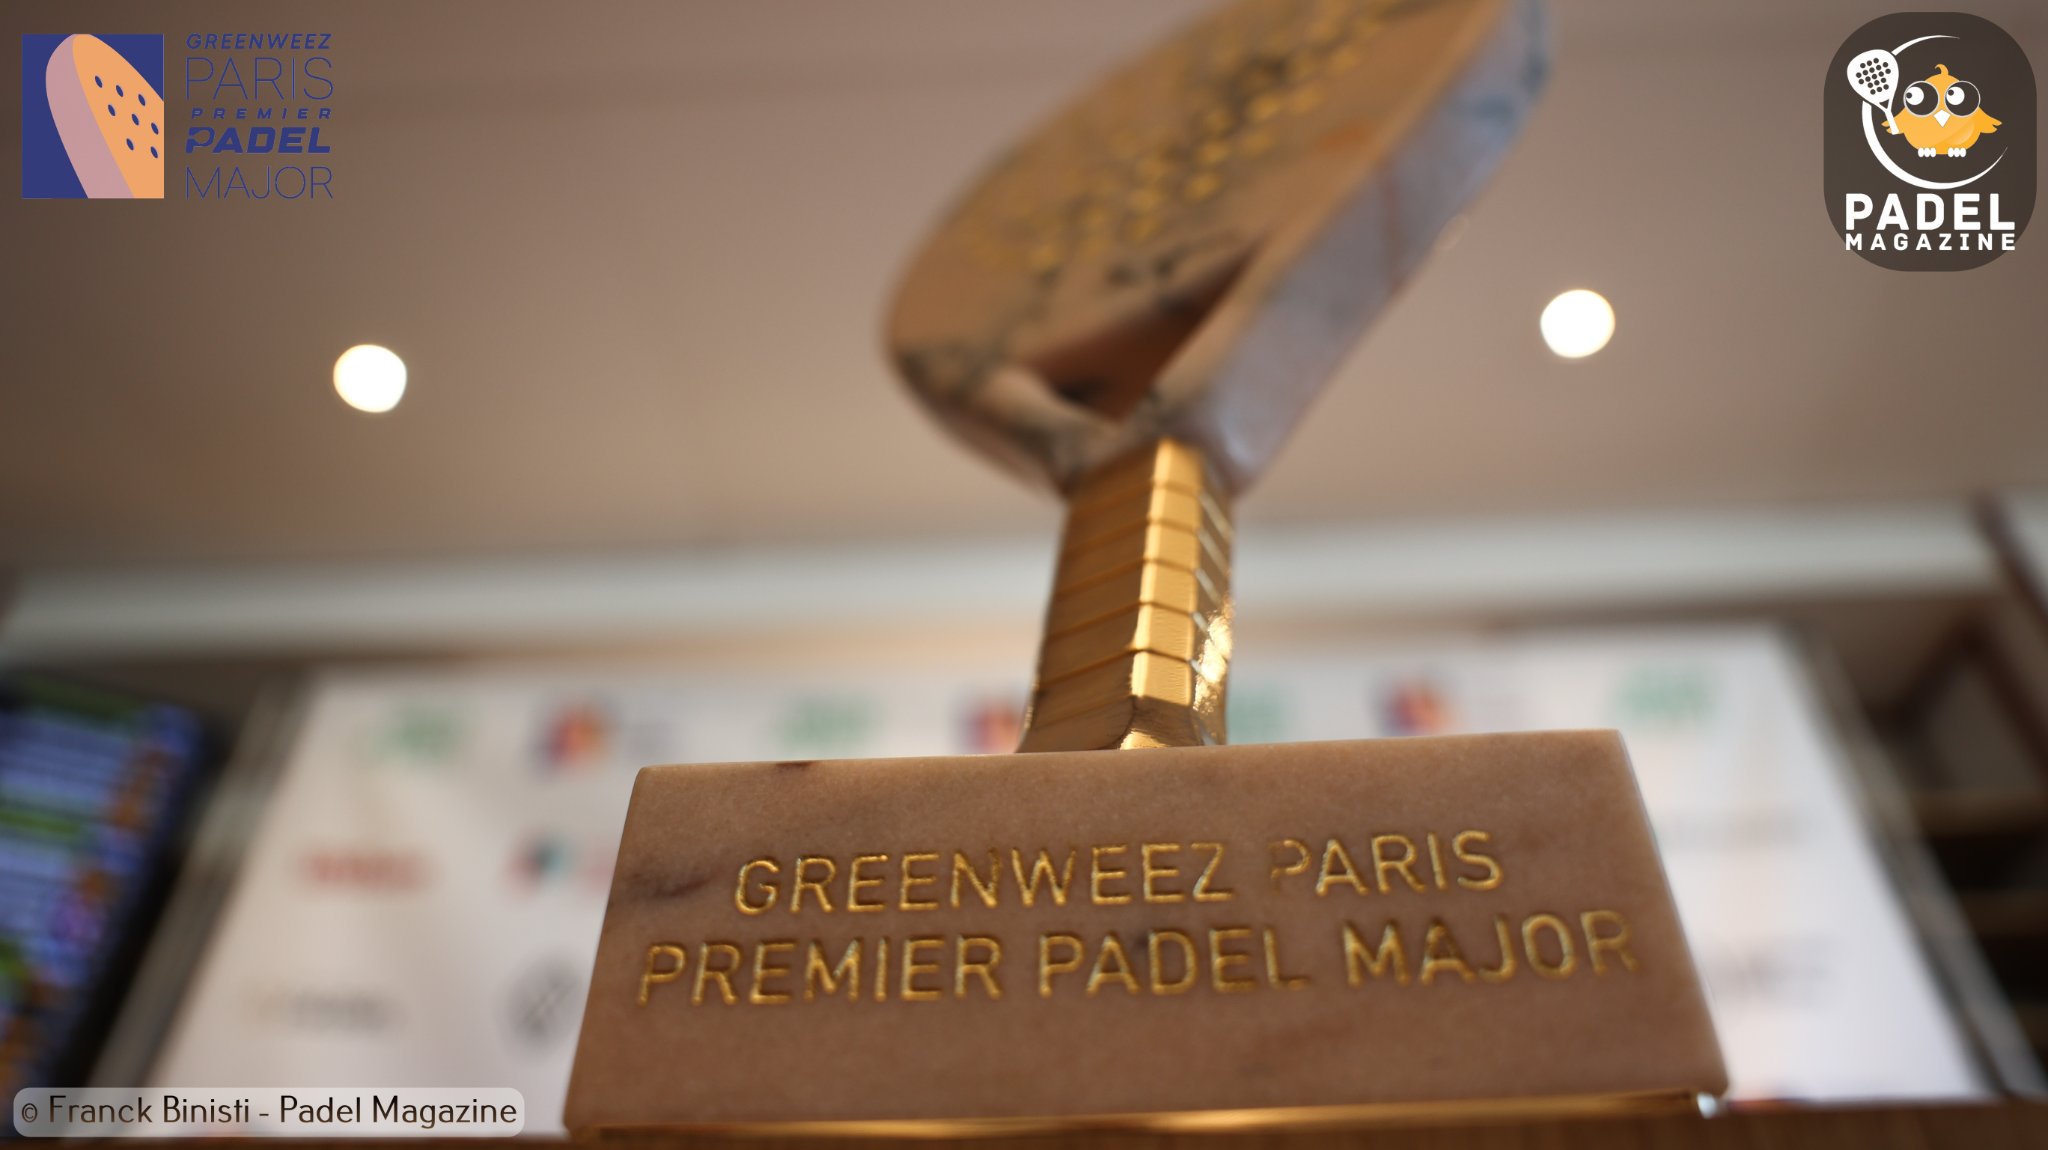 greenweez paris premier padel major 2022 roland garros trofæ